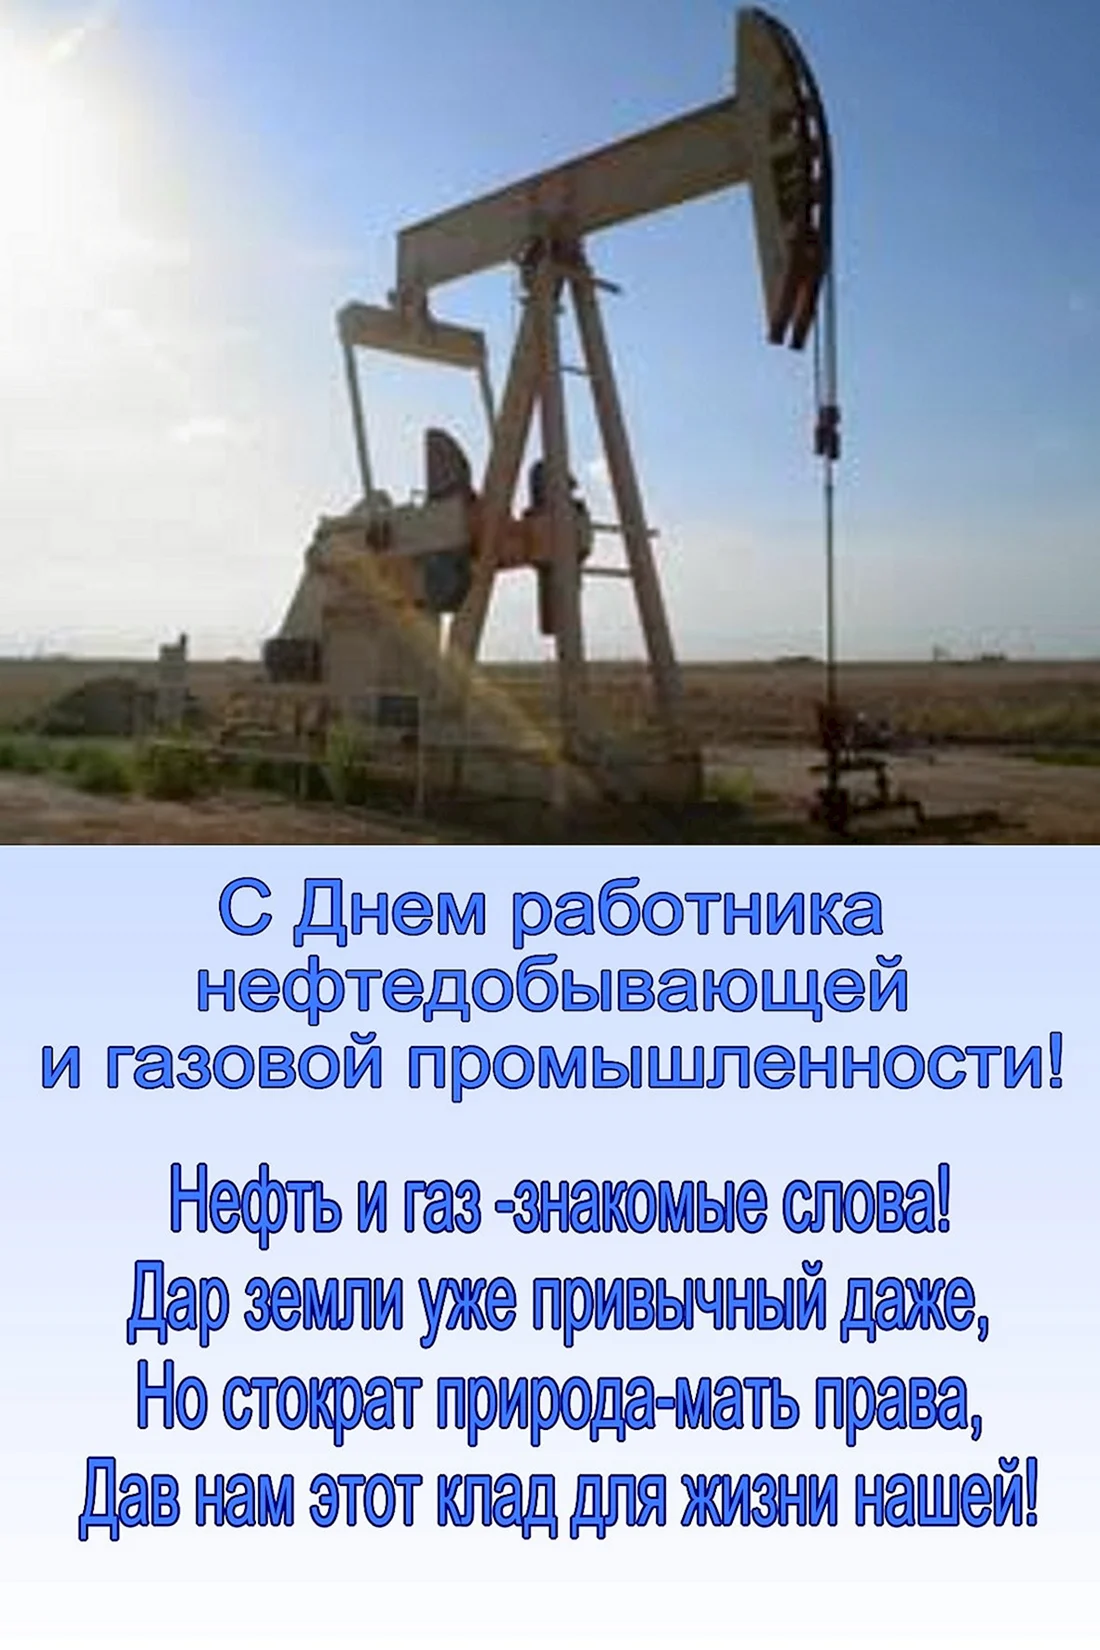 С днем нефтяника